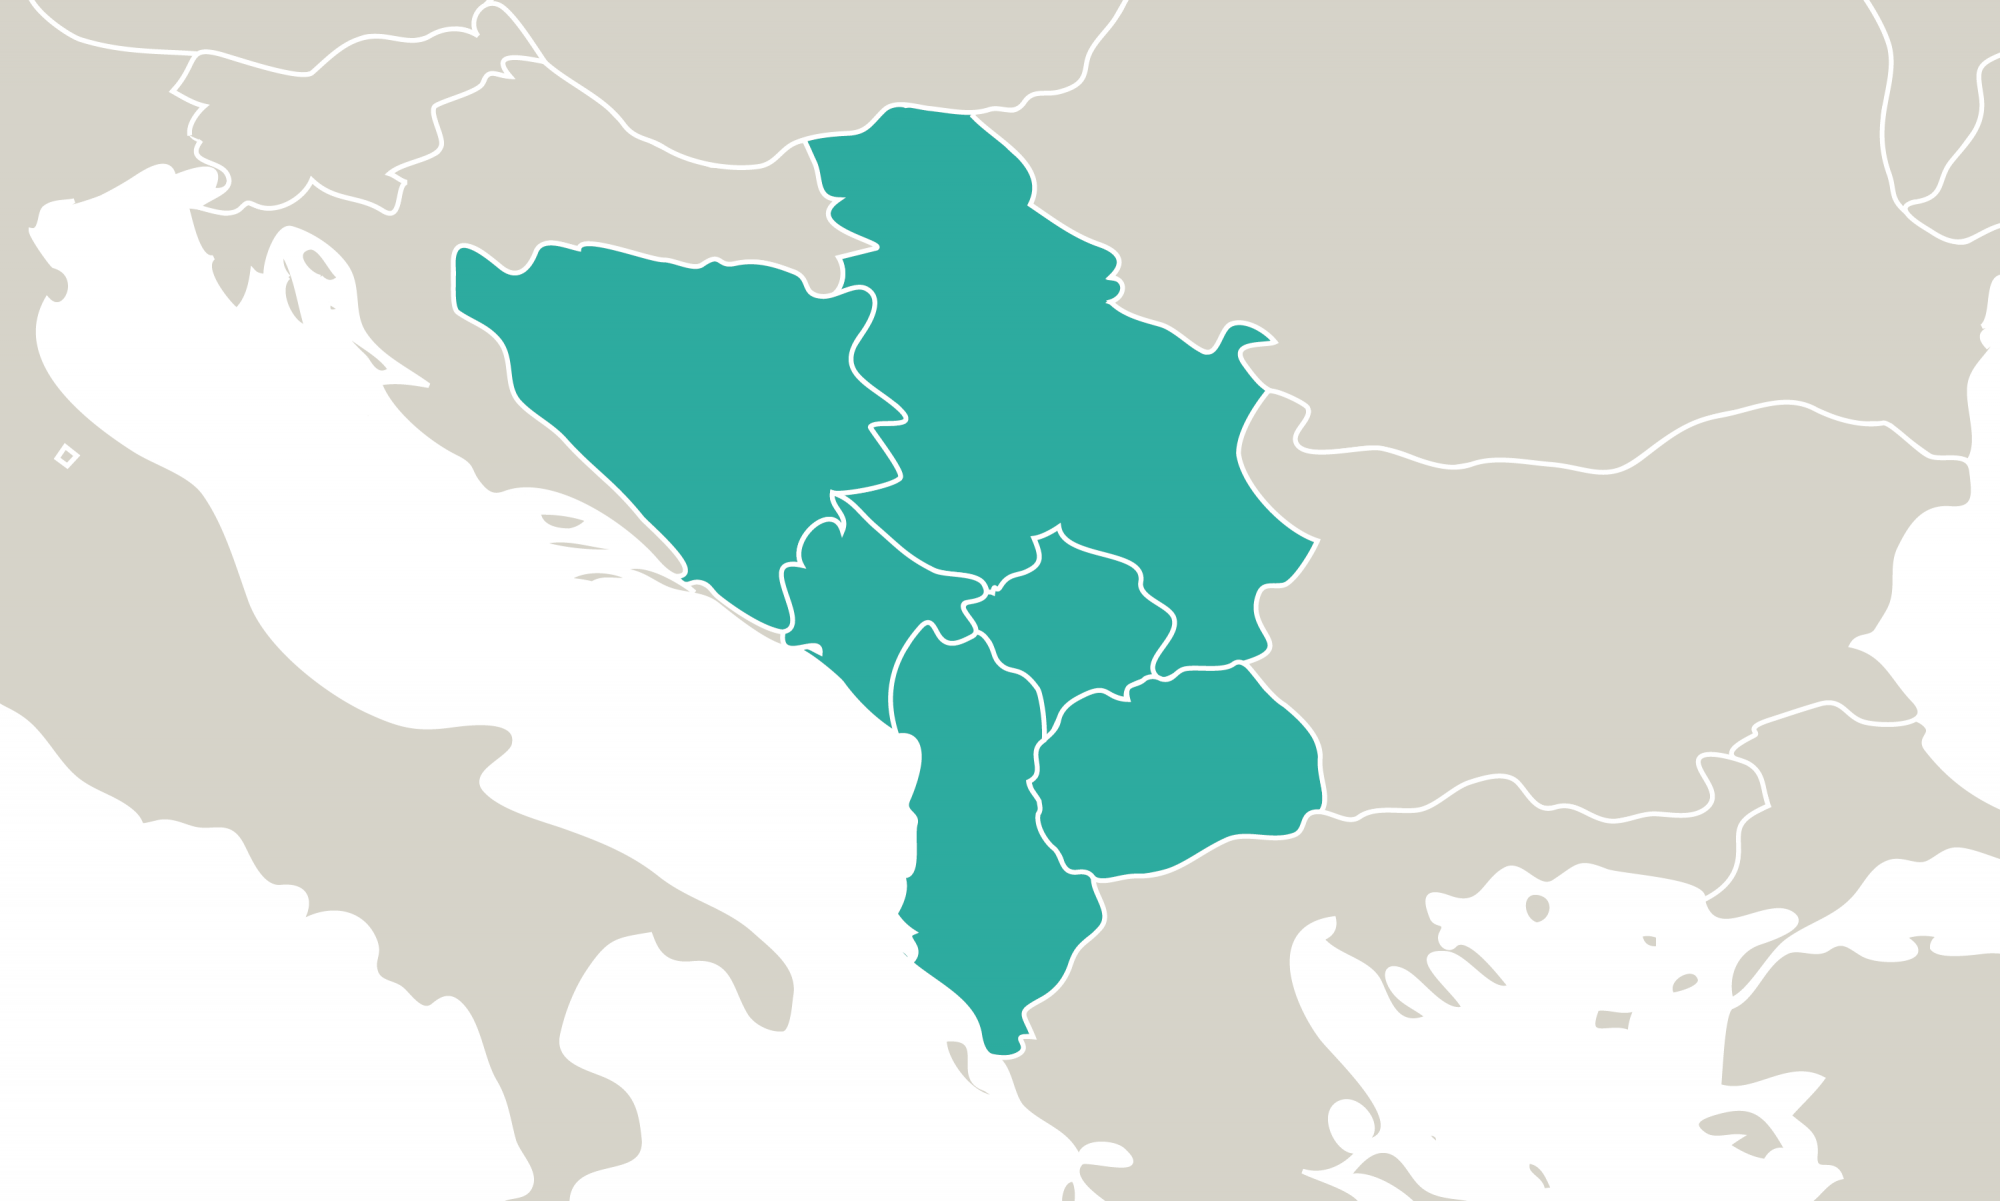 Europe Western Balkans 8.30.21 01 ?itok=ZwUG1Ziu